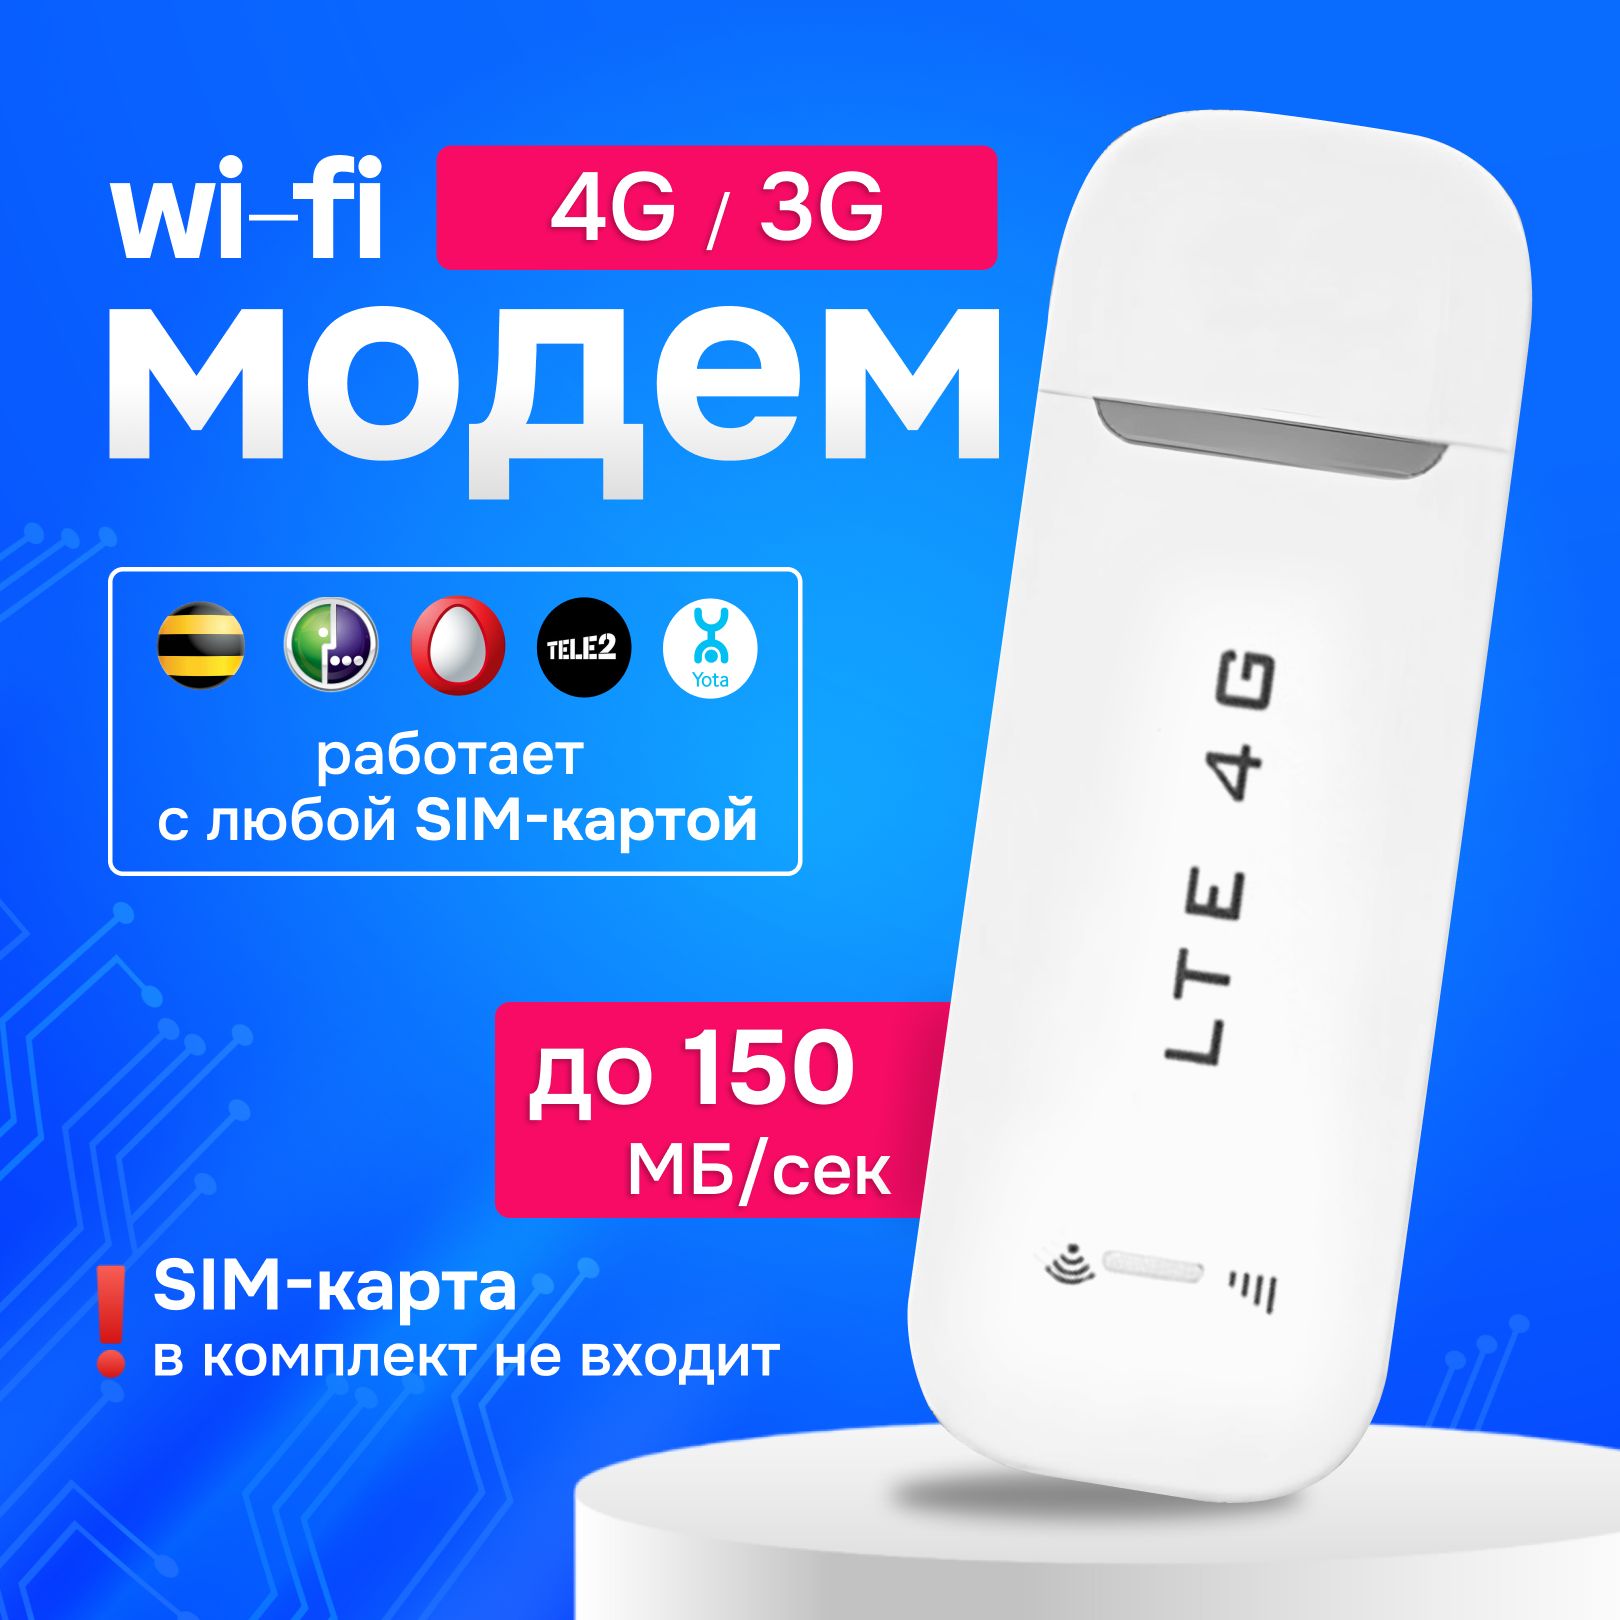 Wi-Fi модемы